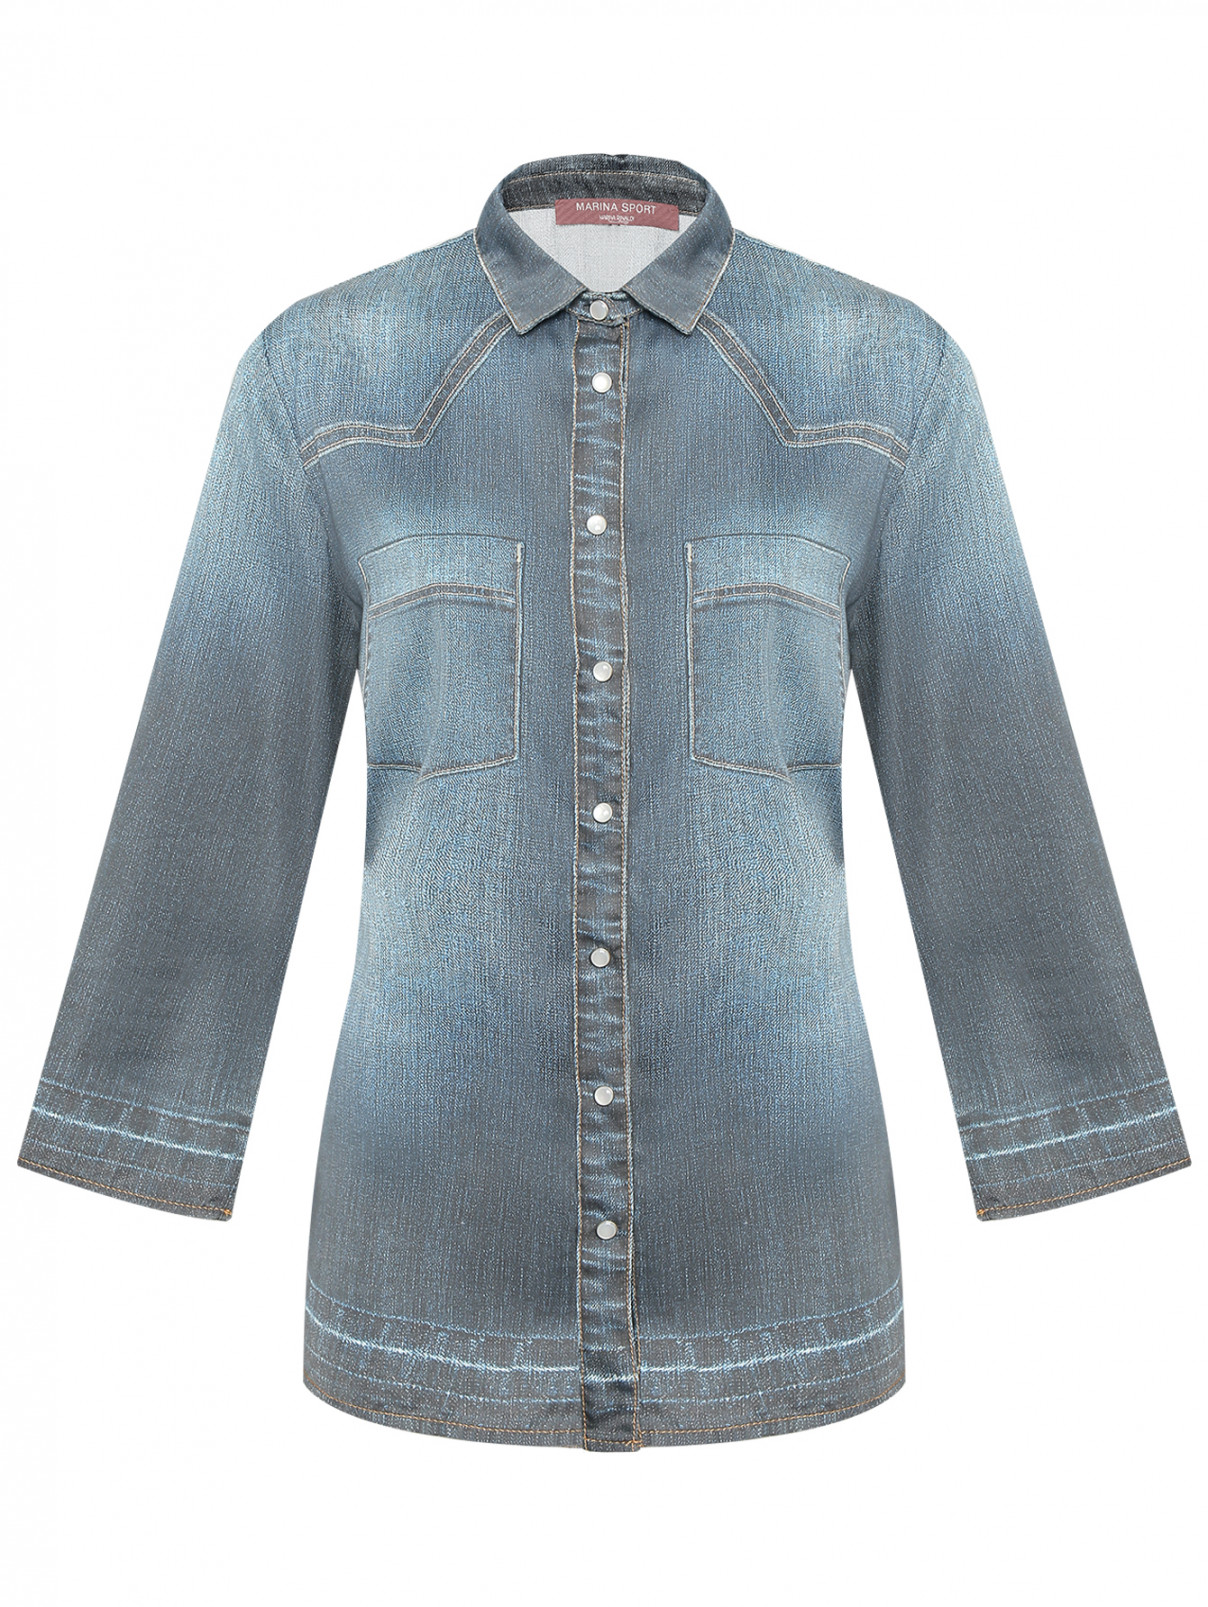 Блуза с узором на кнопках Marina Rinaldi  –  Общий вид  – Цвет:  Синий